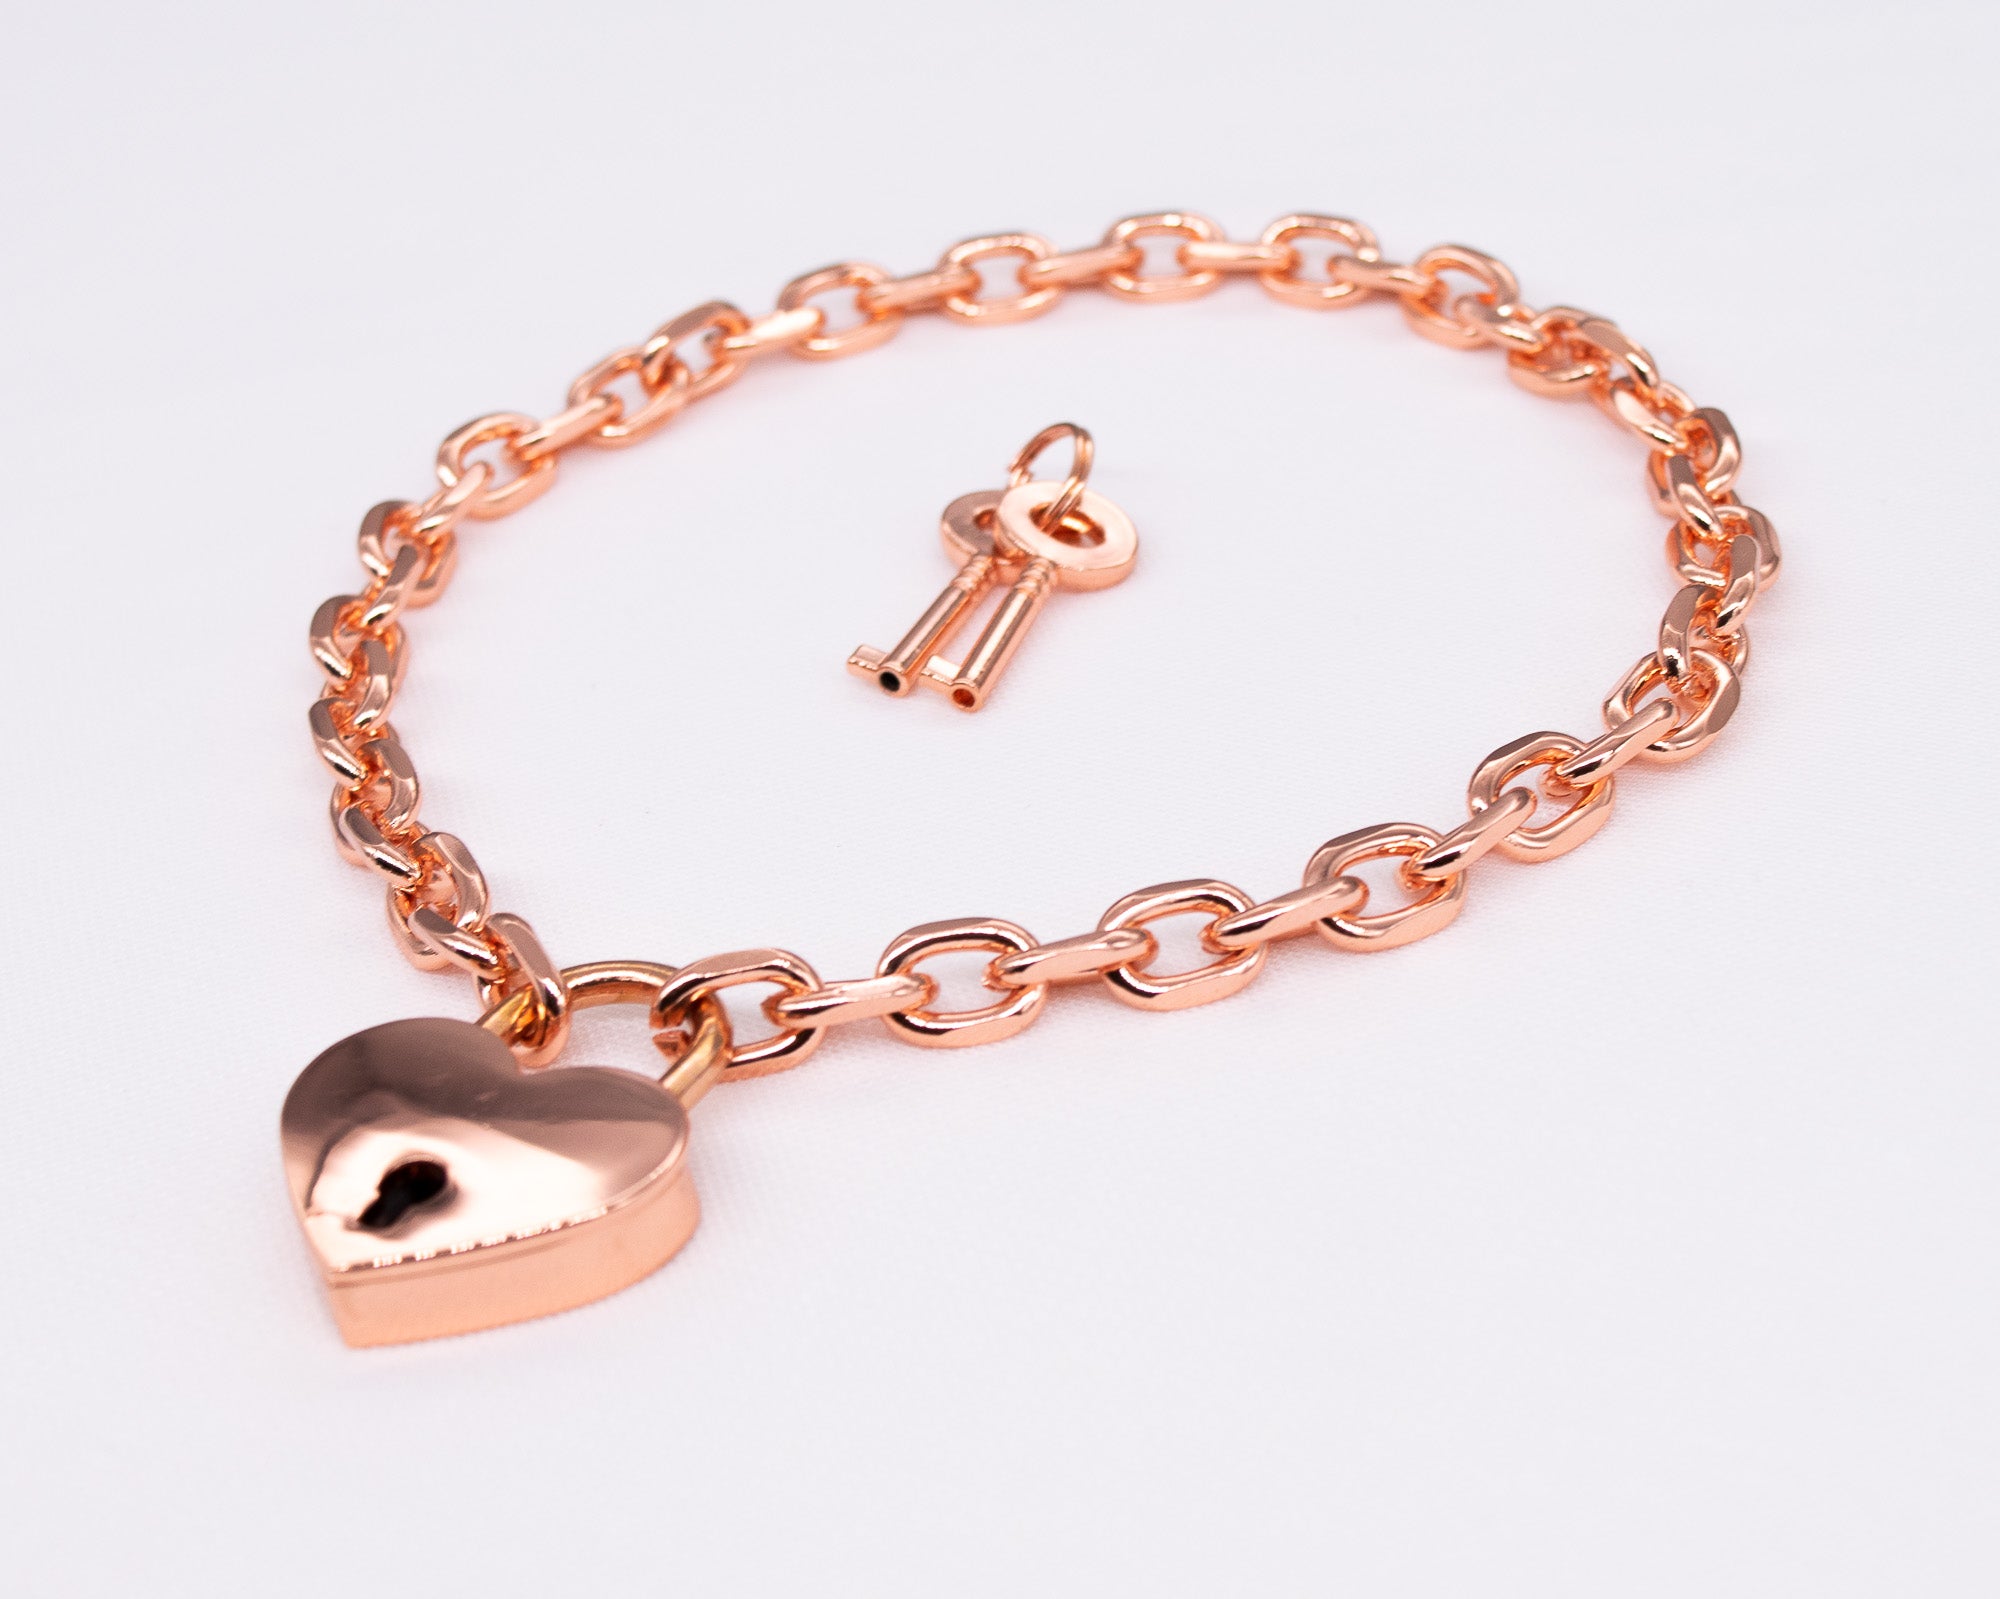 Discreet Day Collar - Rose Gold Heart Locked O-link Chain Choker